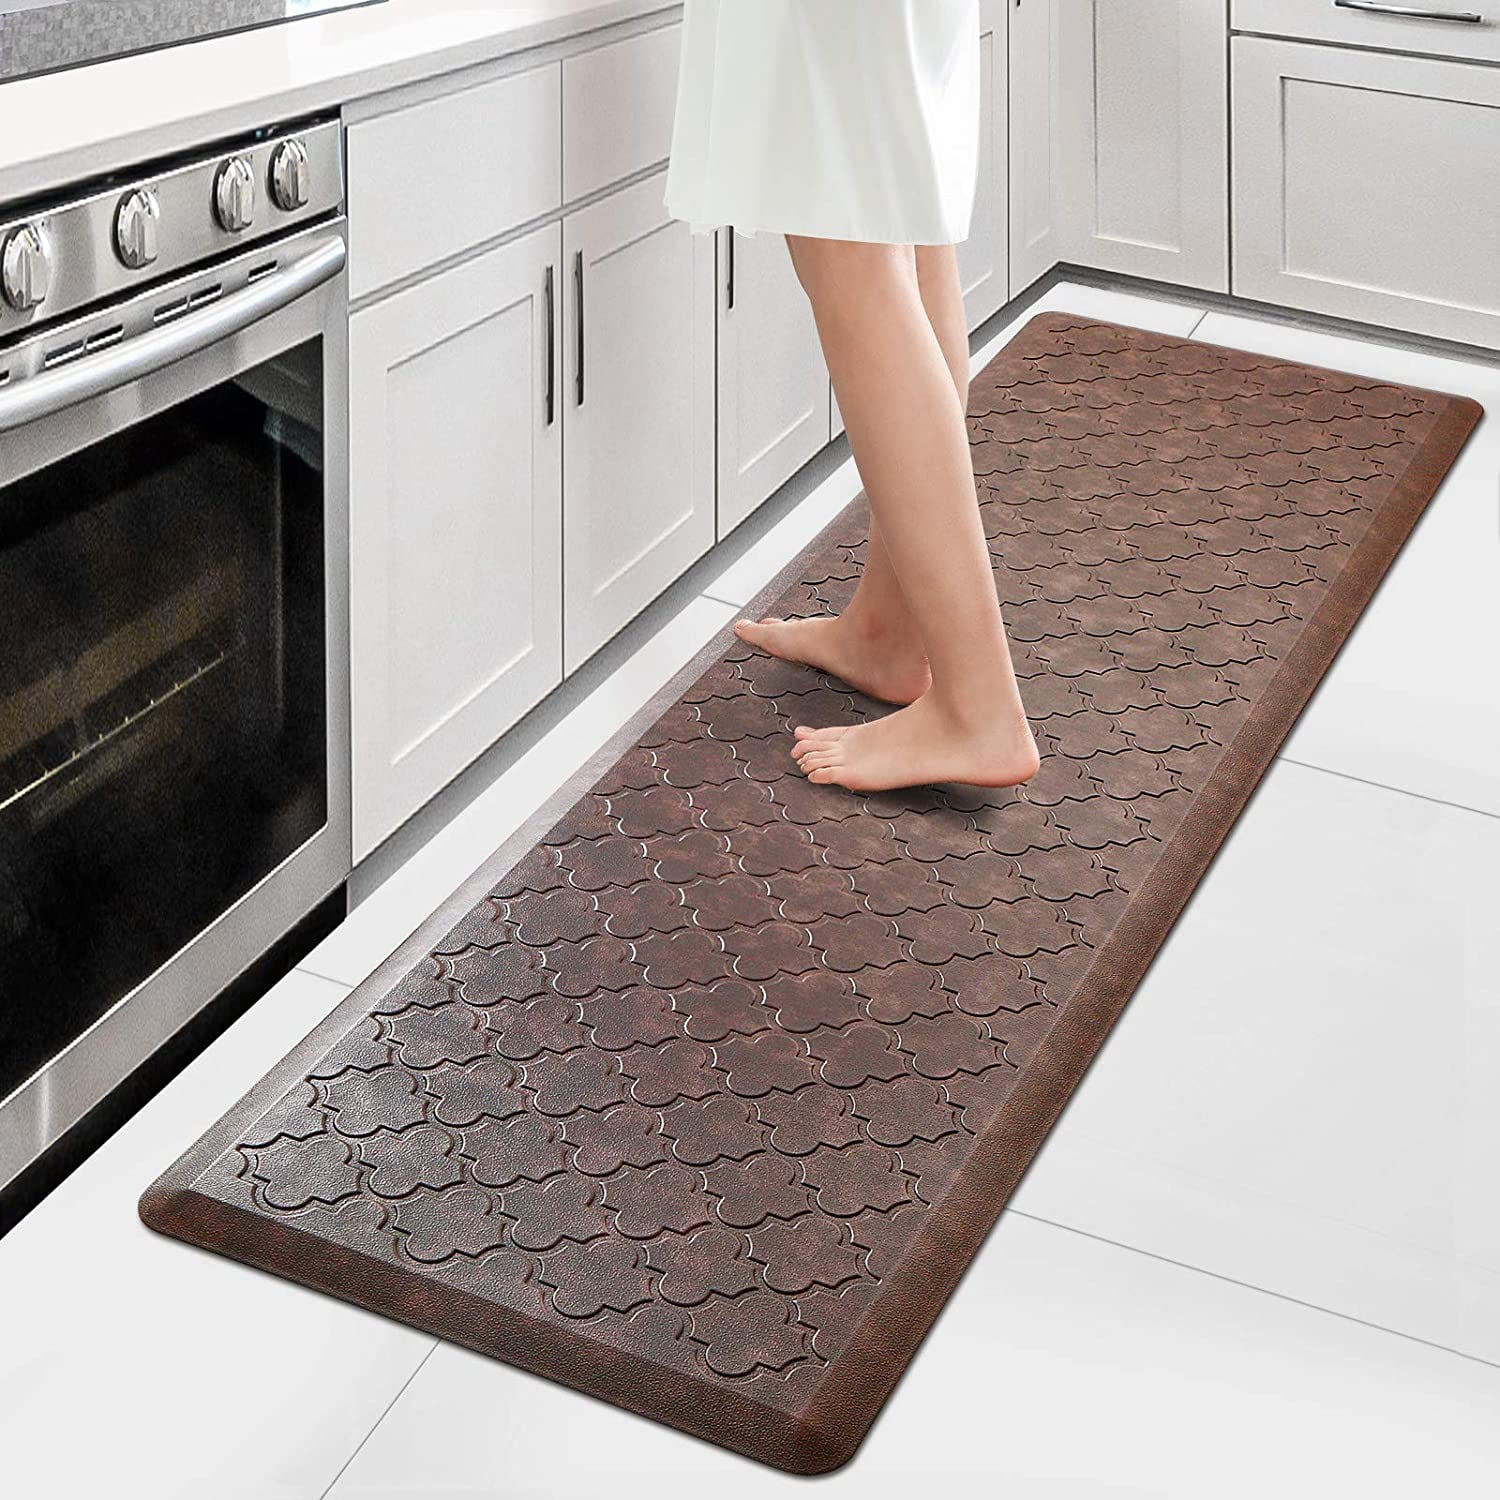 Anti-Fatigue Kitchen Mat Cushioned Waterproof Runner Non-Slip Comfort Floor Mat 